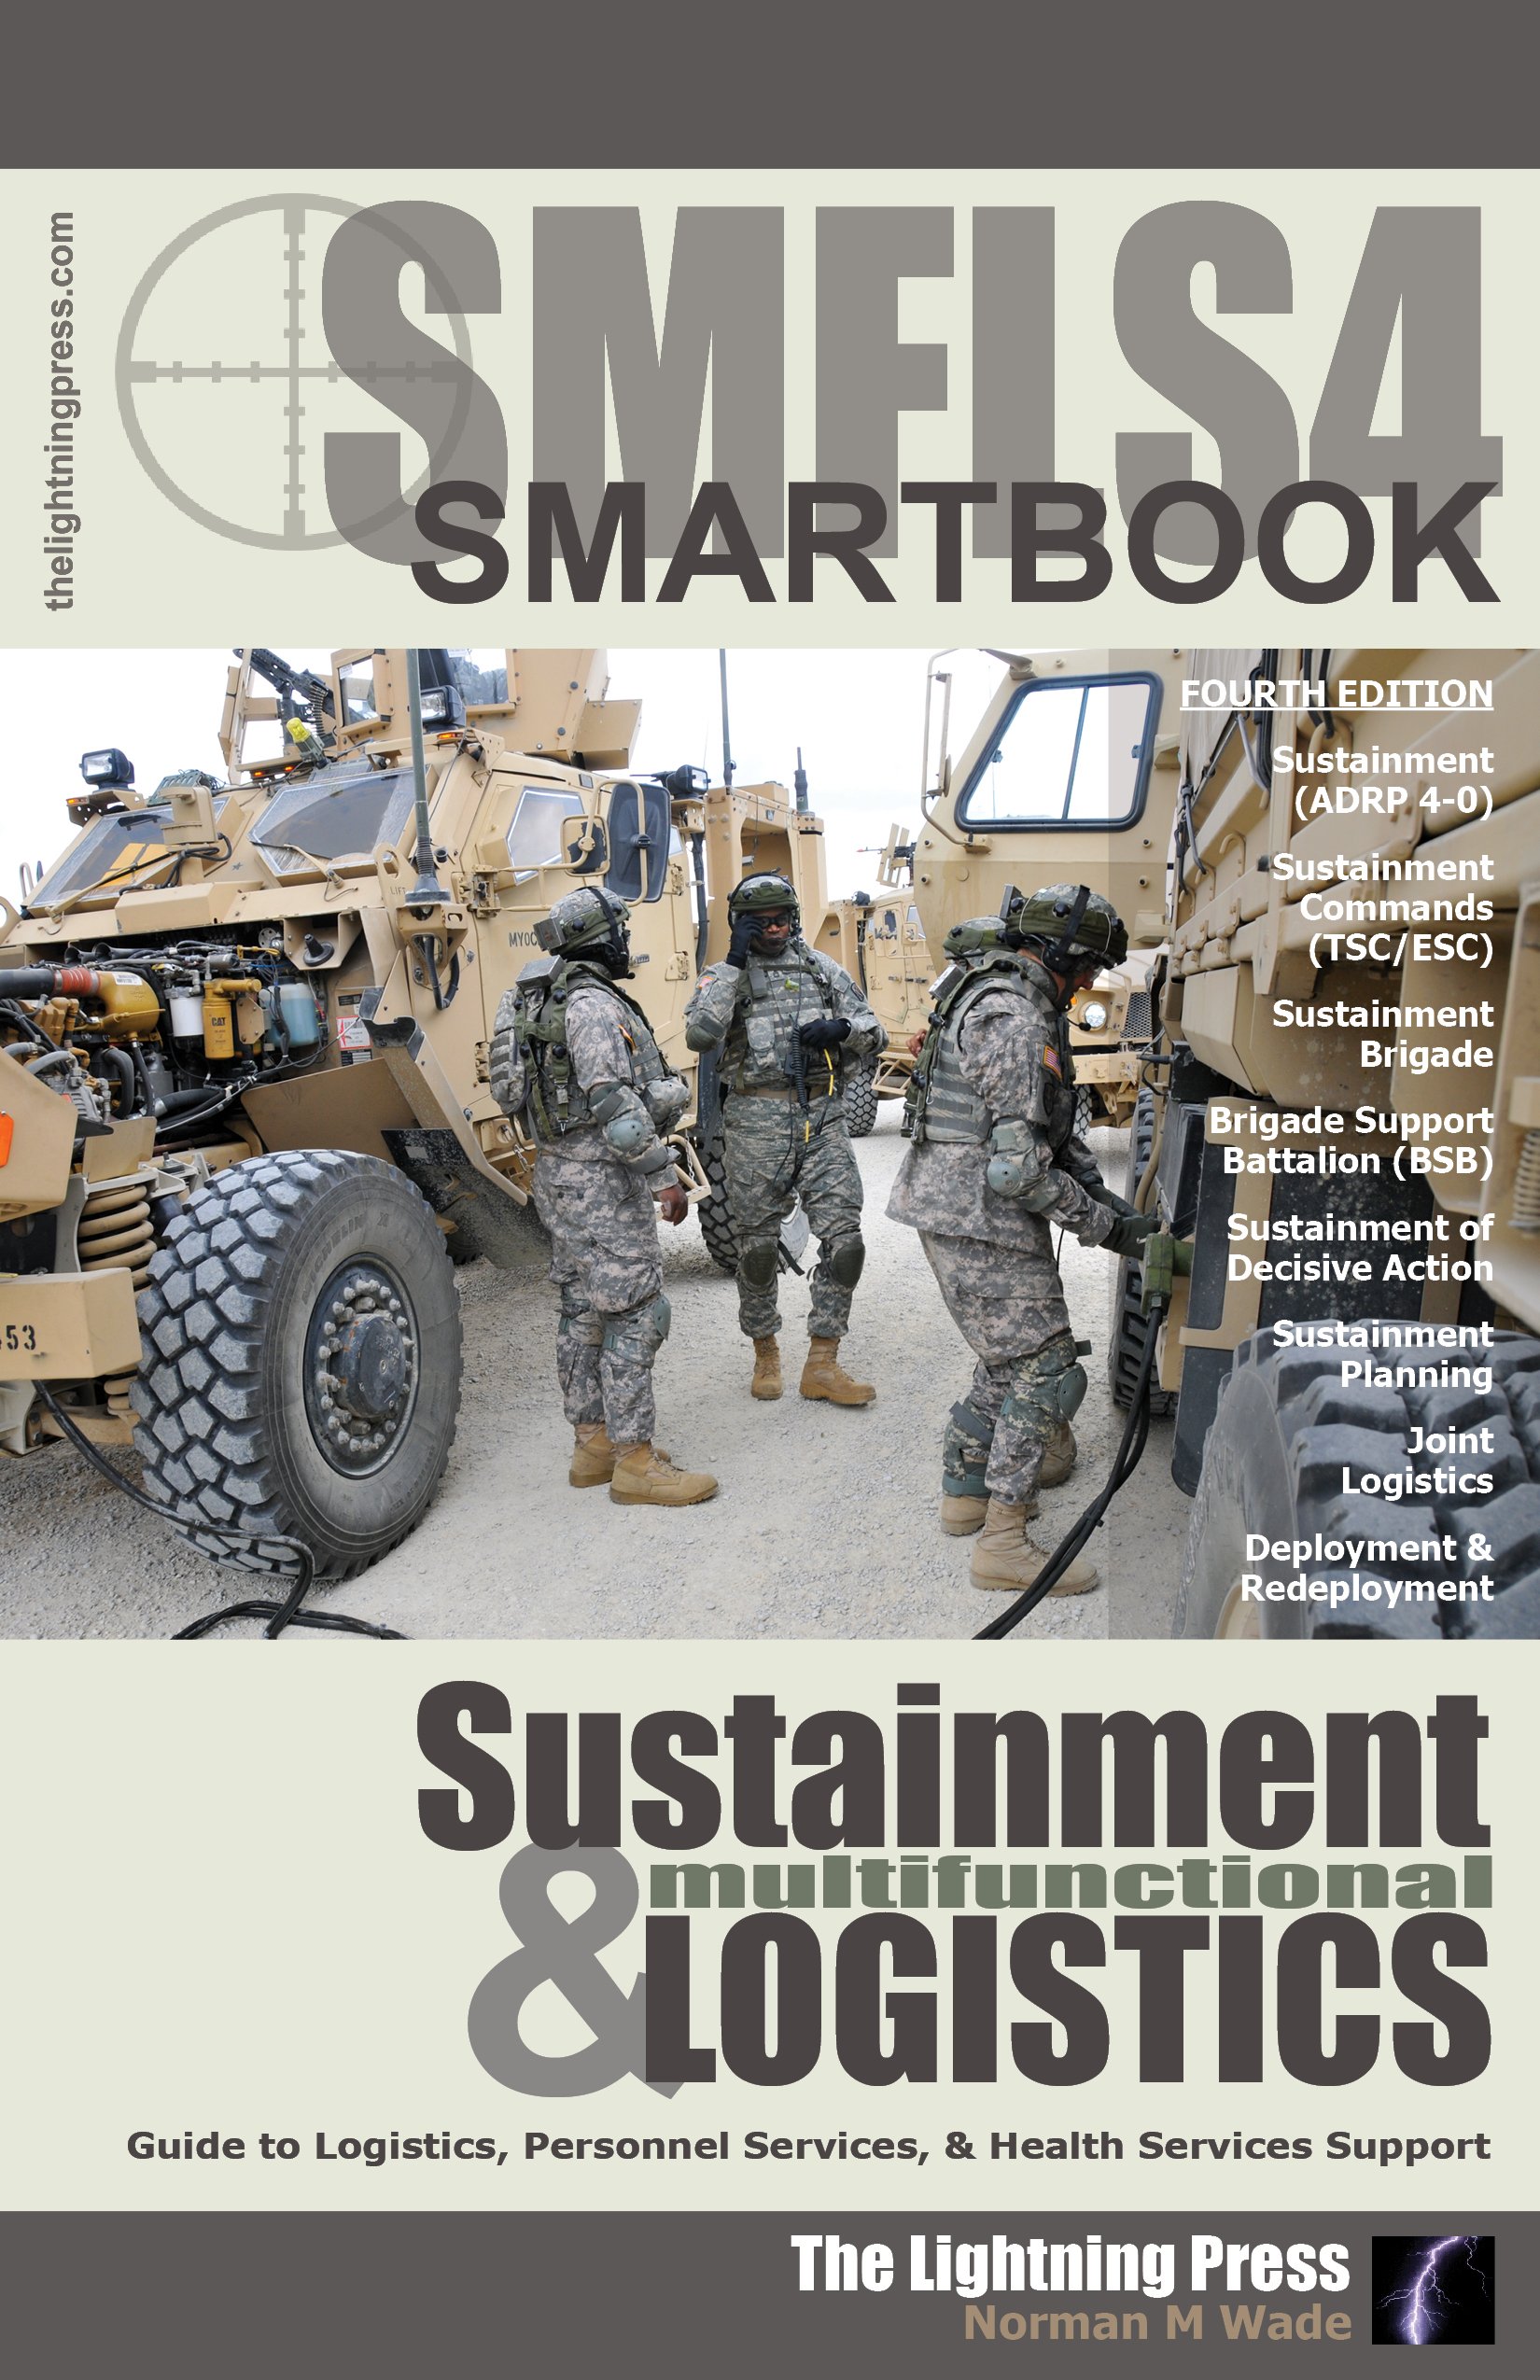 SMFLS4: Sustainment & Multifunctional Logistics SMARTbook, 4th Ed.